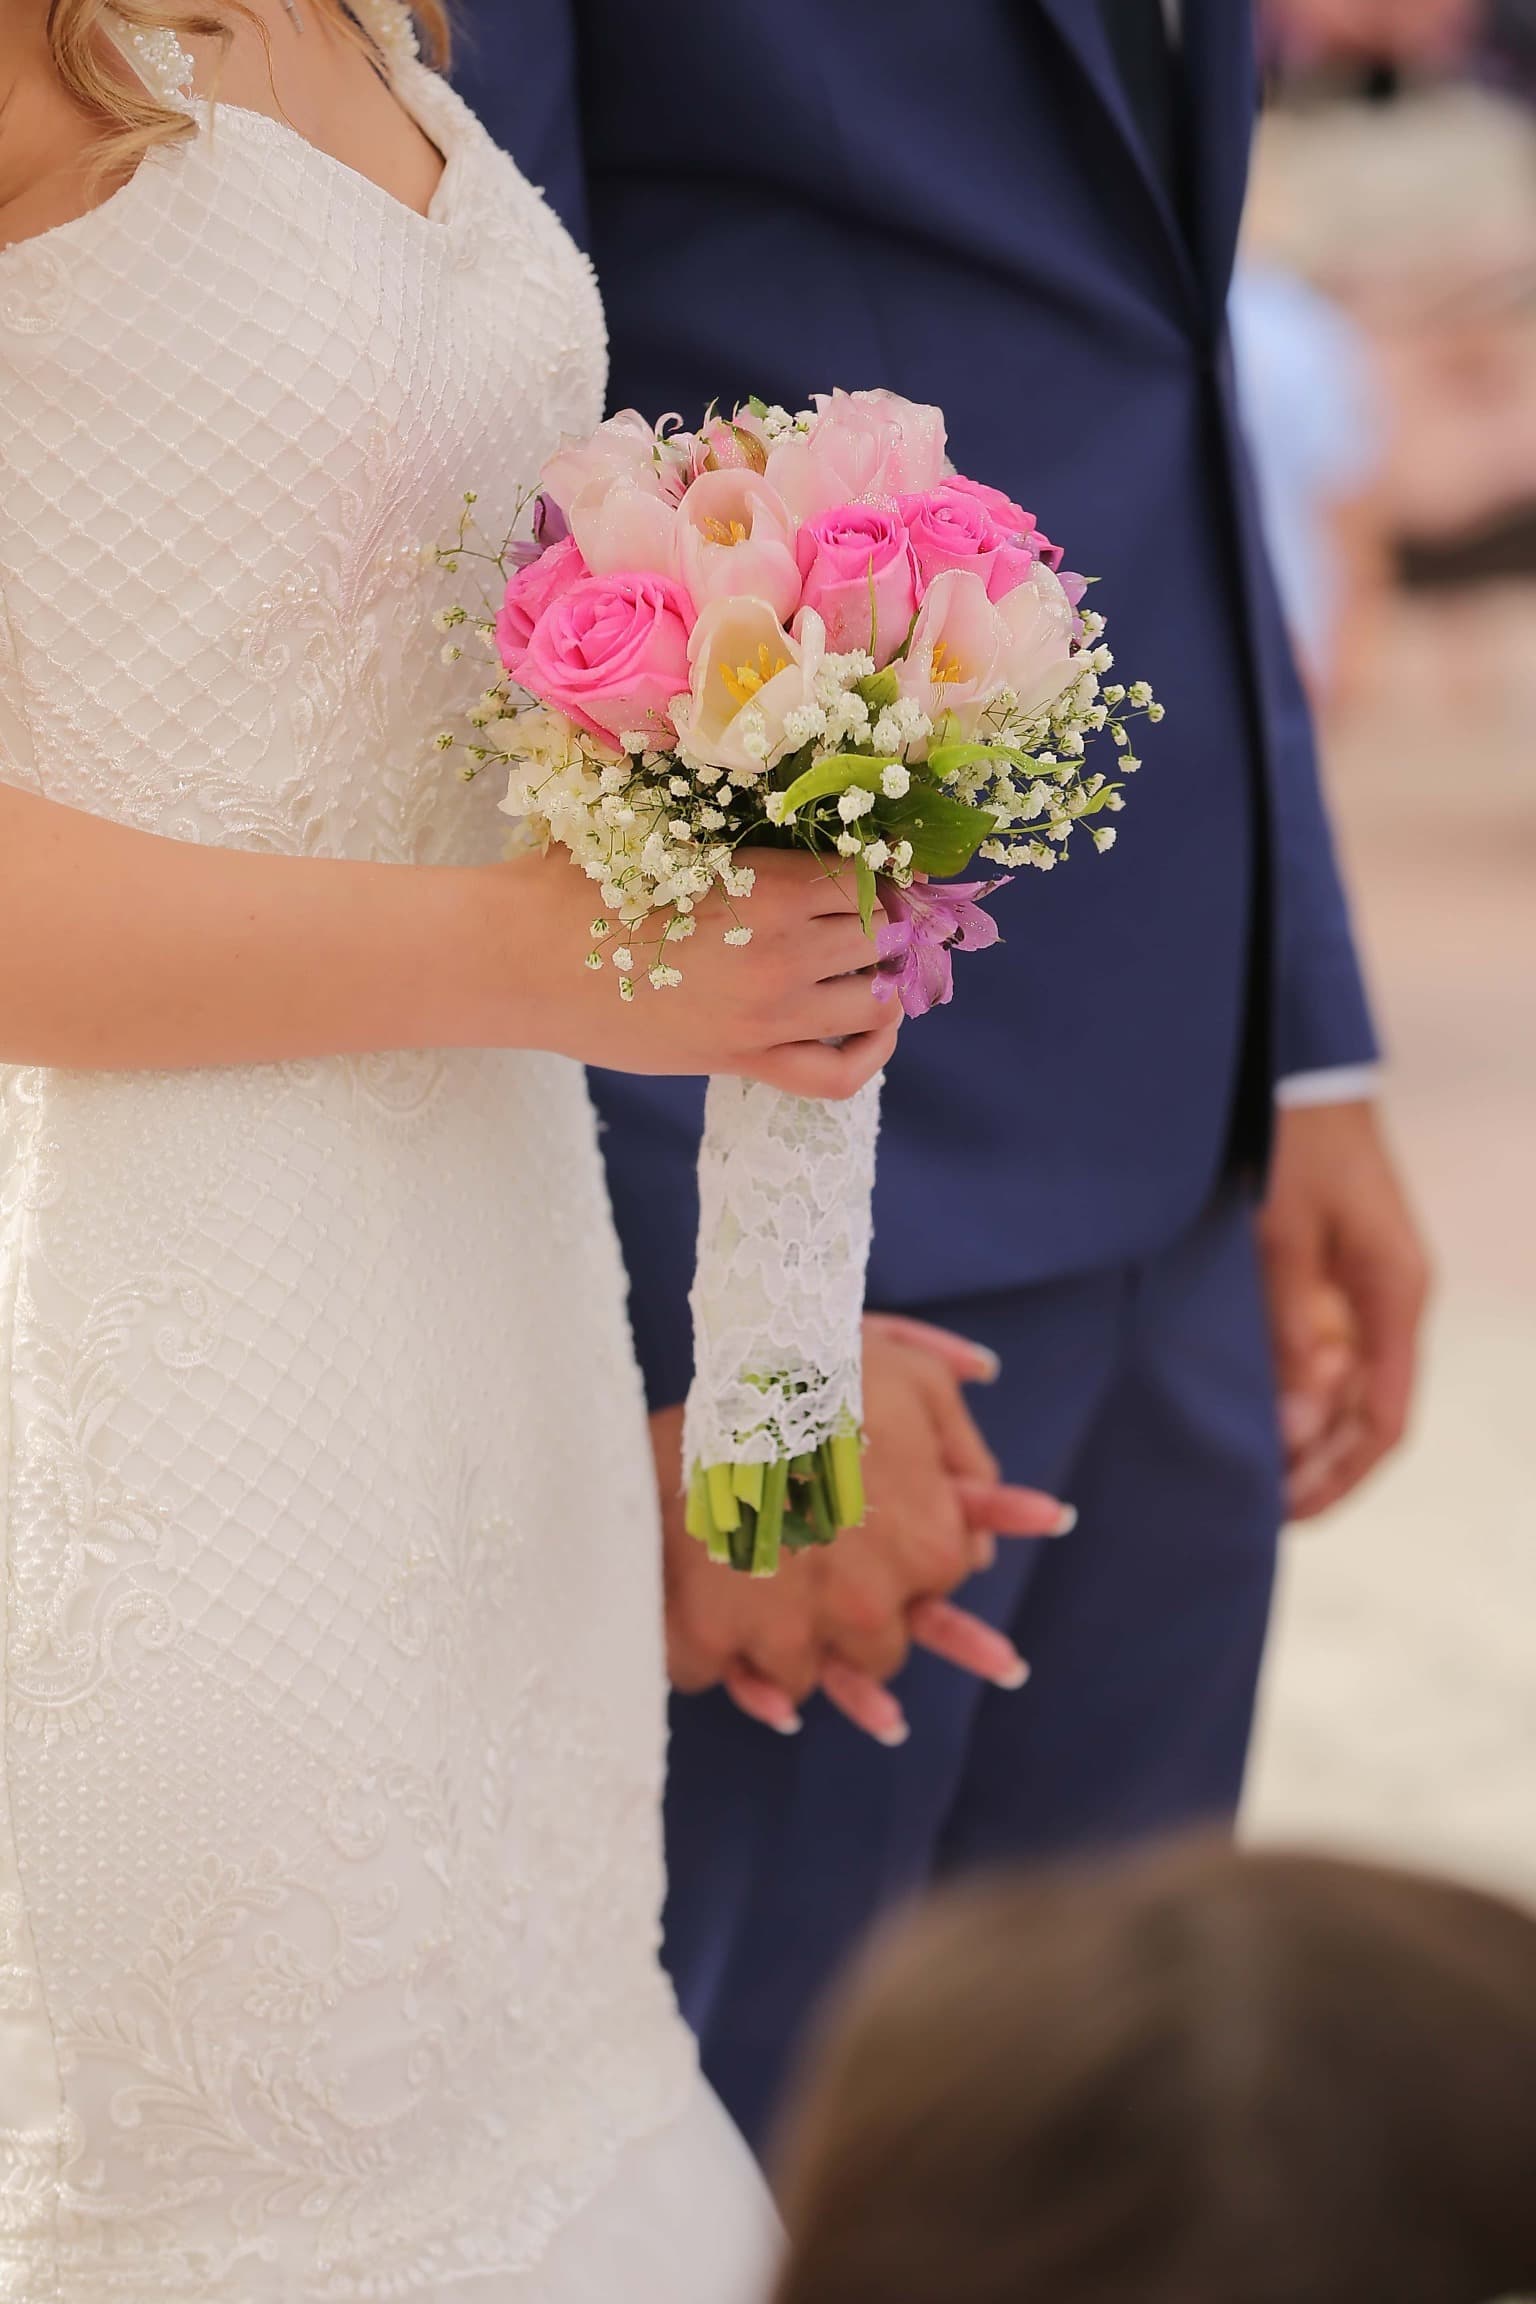 Free picture: wedding bouquet, wedding, wedding dress, groom, bride ...